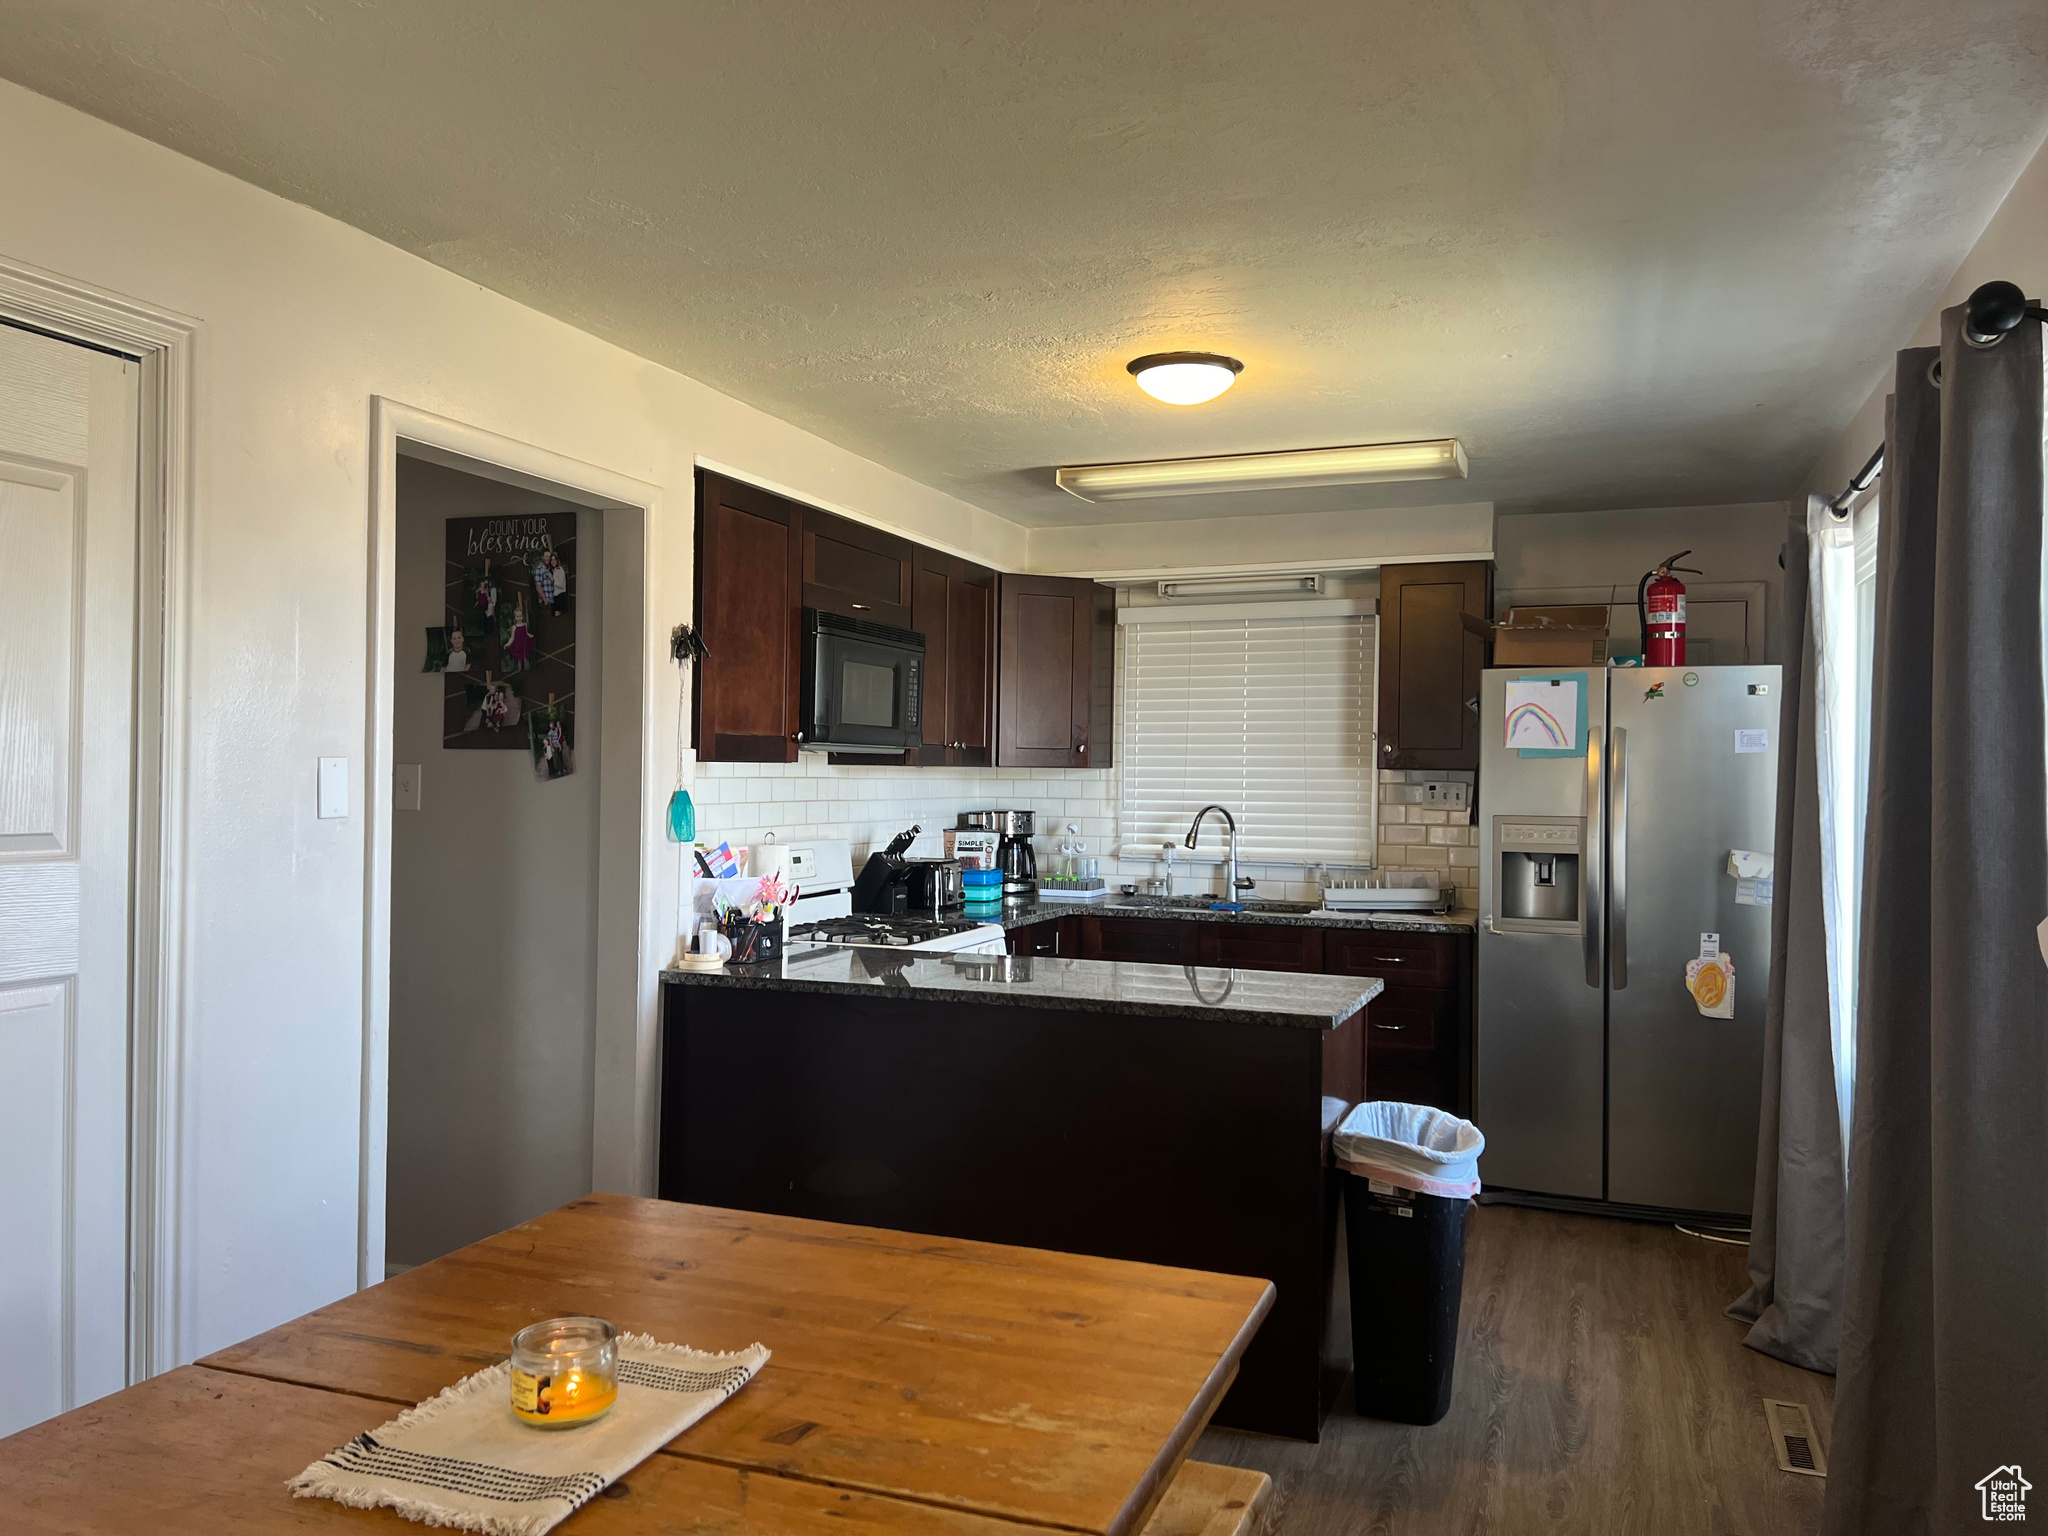 Kitchen with stainless steel fridge with ice dispenser, tasteful backsplash, and dark brown cabinetry